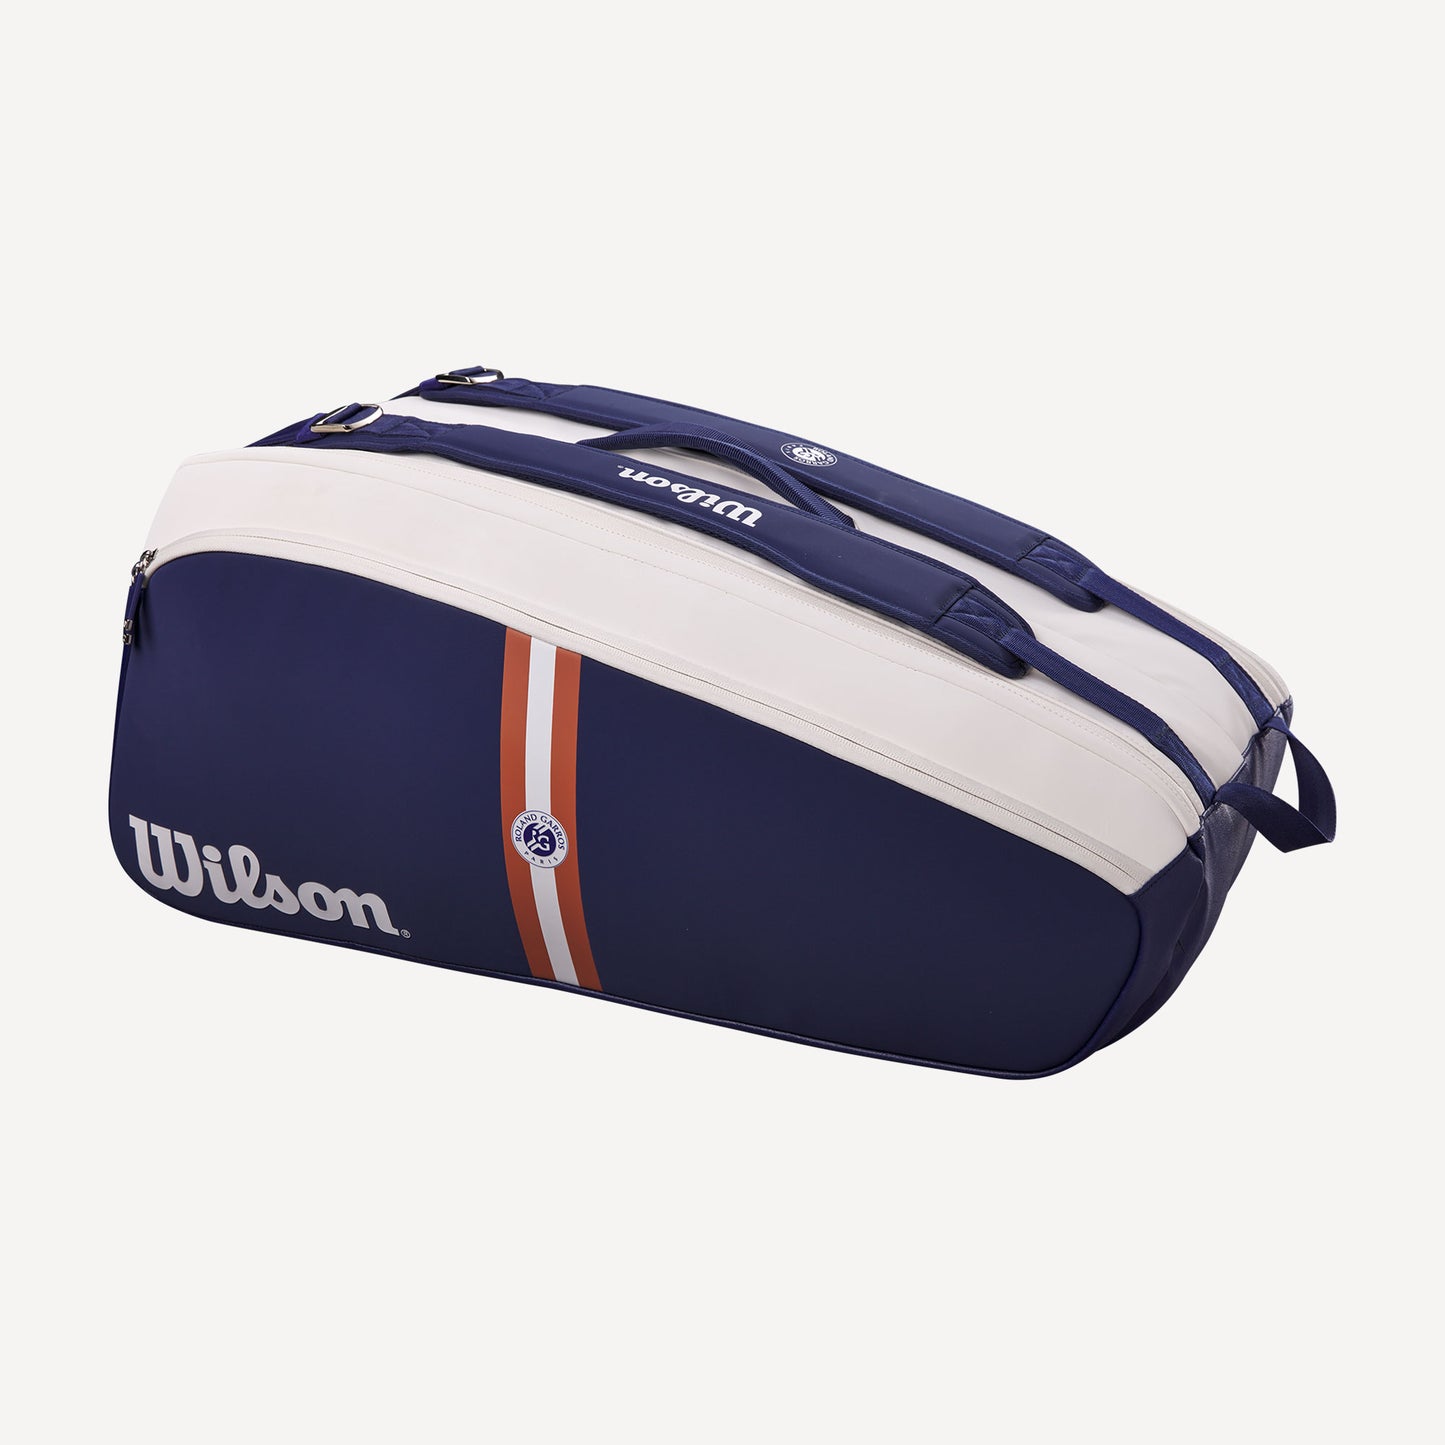 Wilson Roland-Garros Super Tour 9 Pack Tennis Bag Blue (1)